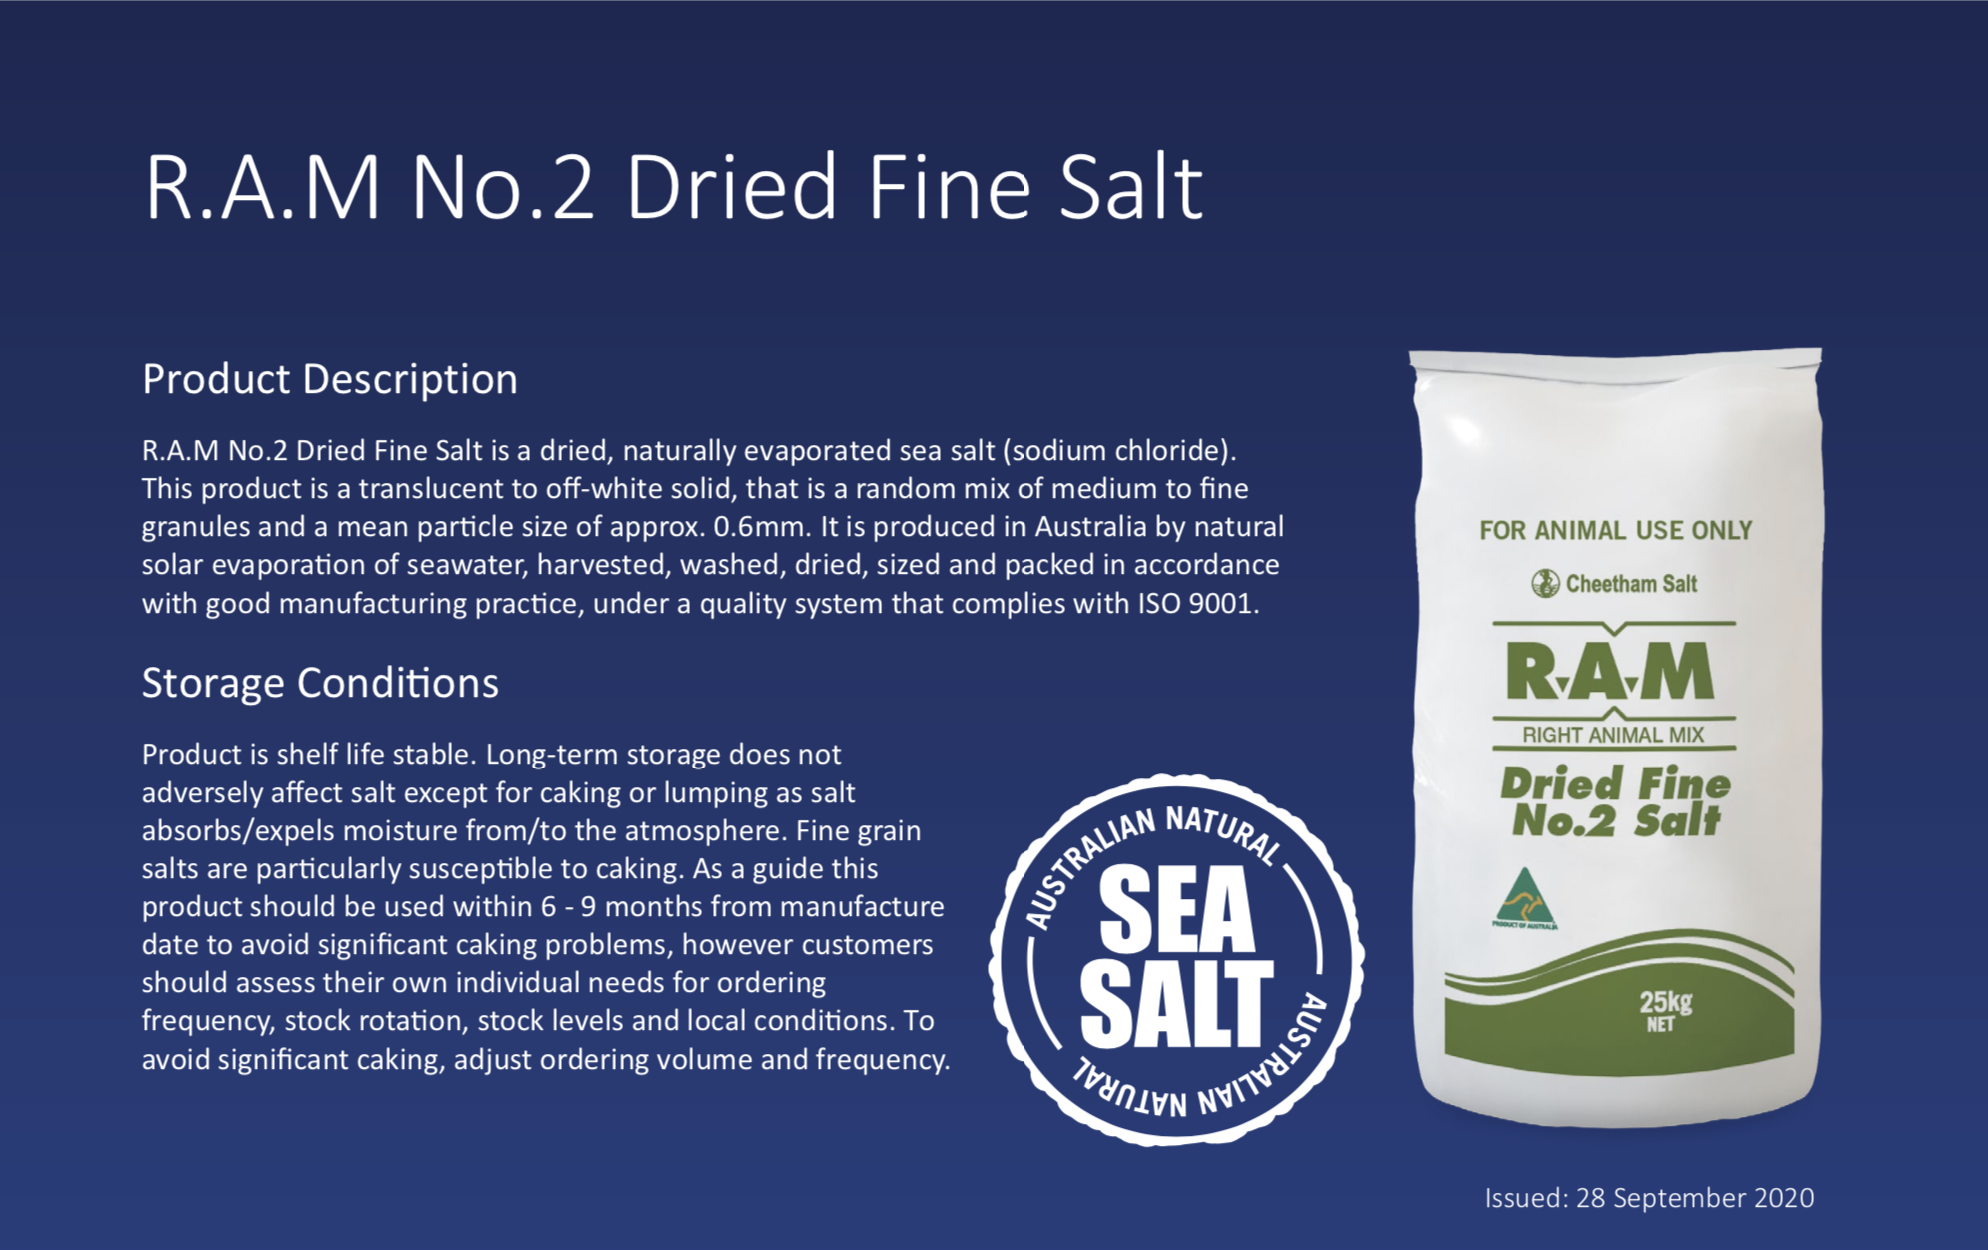 Am image of R.A.M. No.2 dried fine salt product description and storage conditions